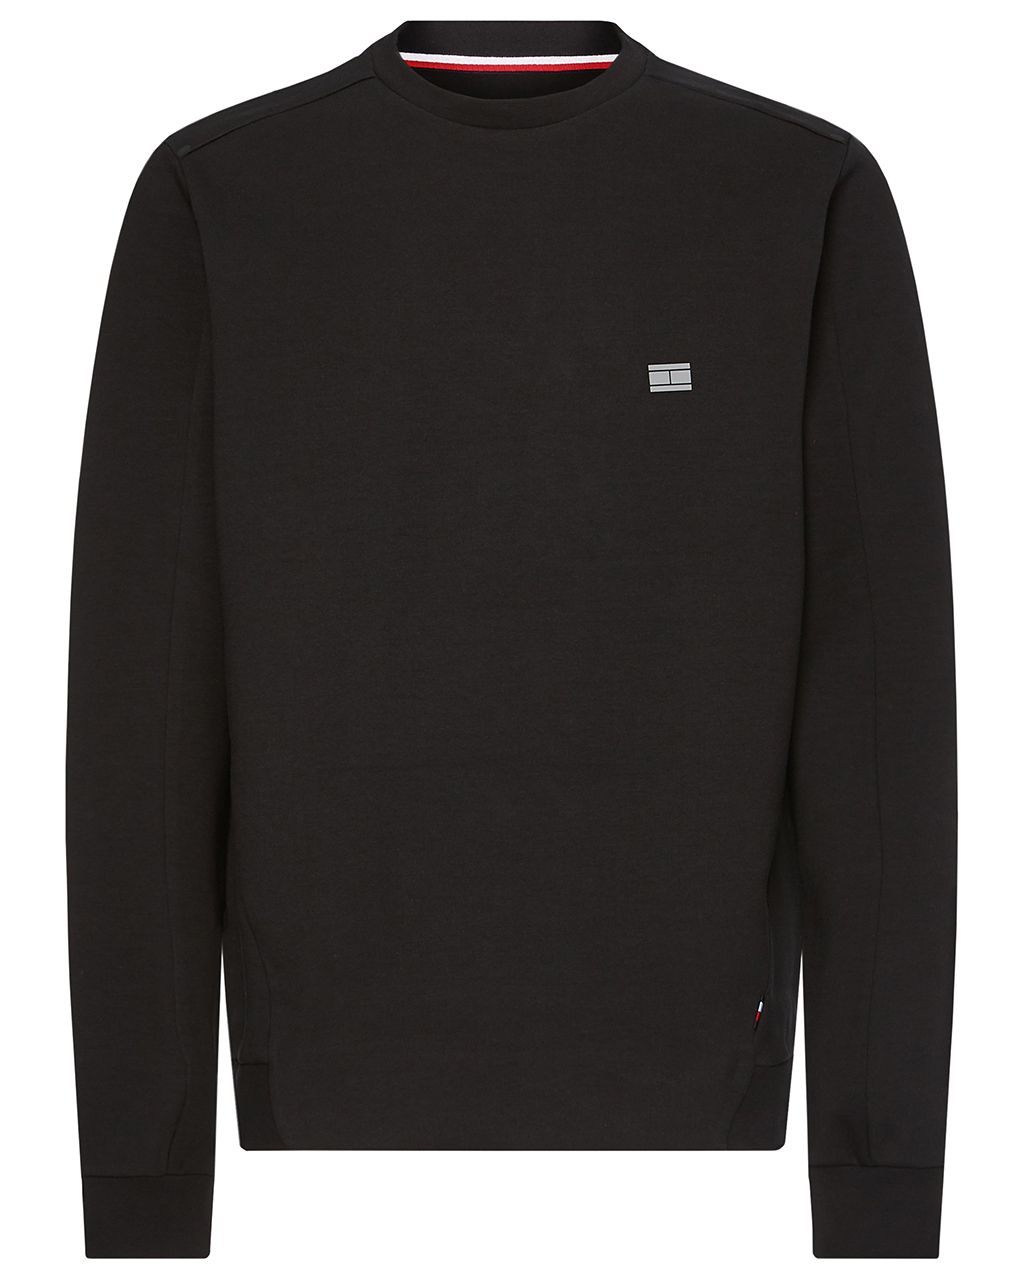 Tommy Hilfiger Menswear Sweater Zwart 074998-001-L